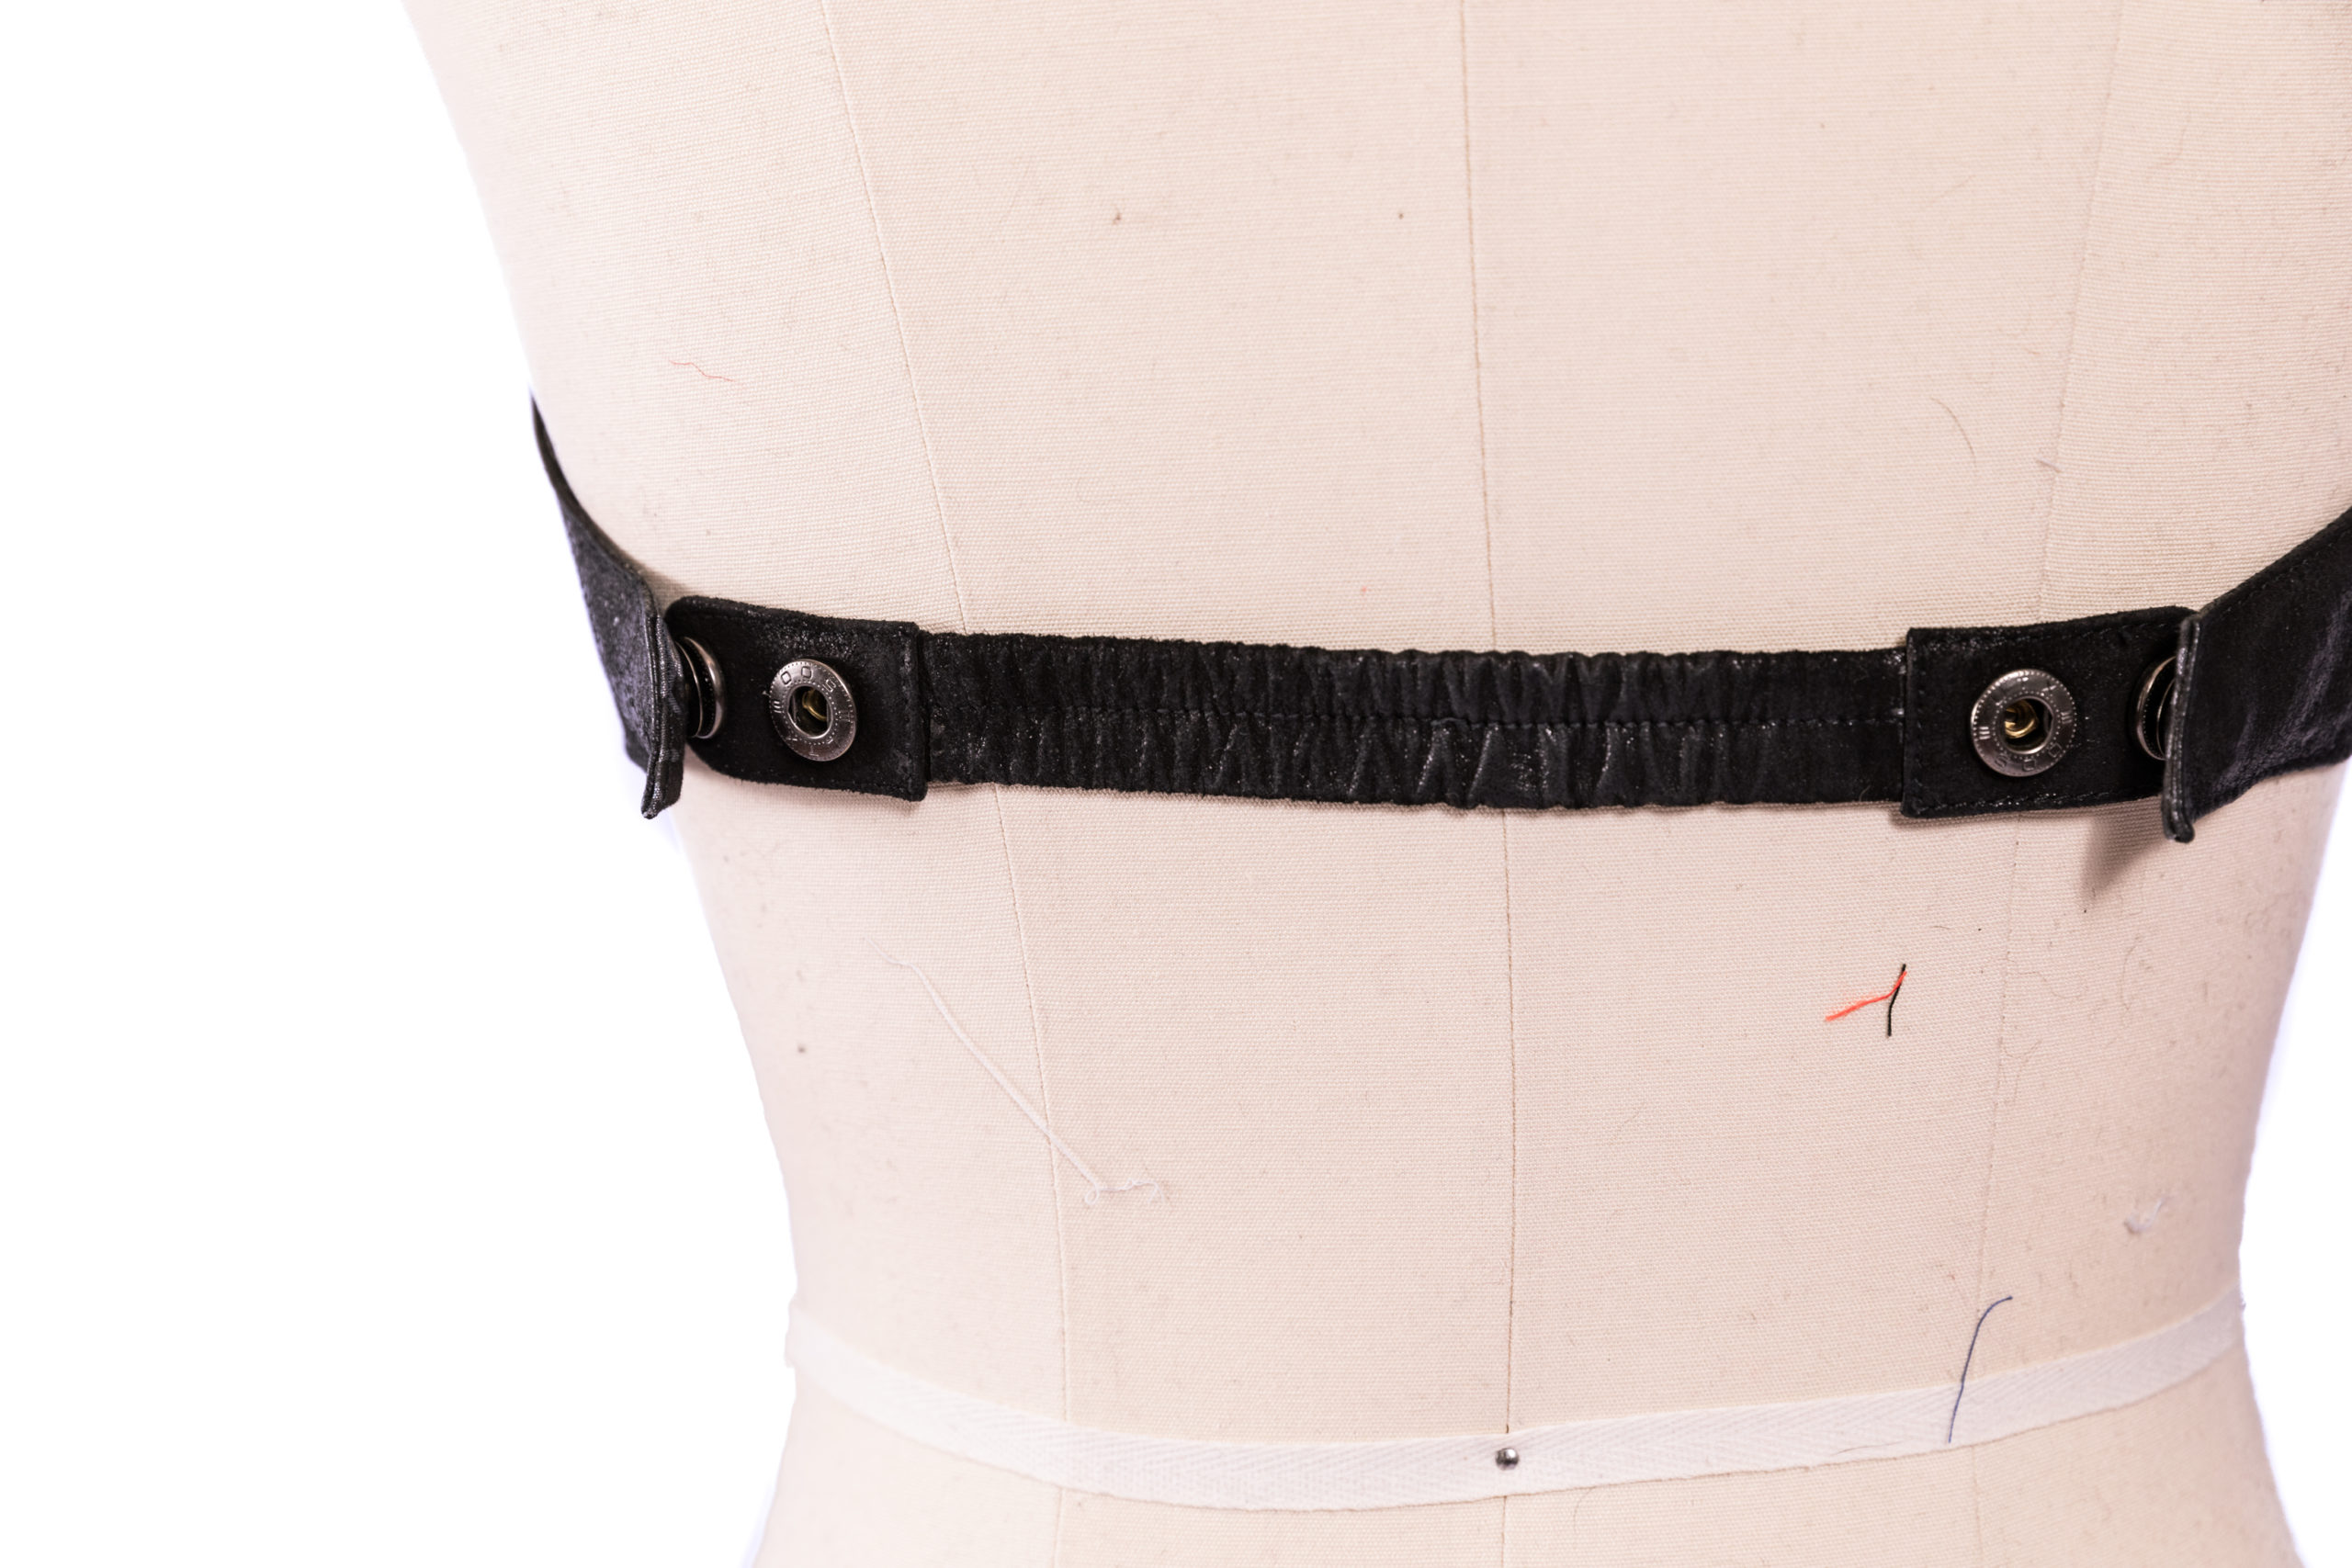 Black leather halter bra top – reversible